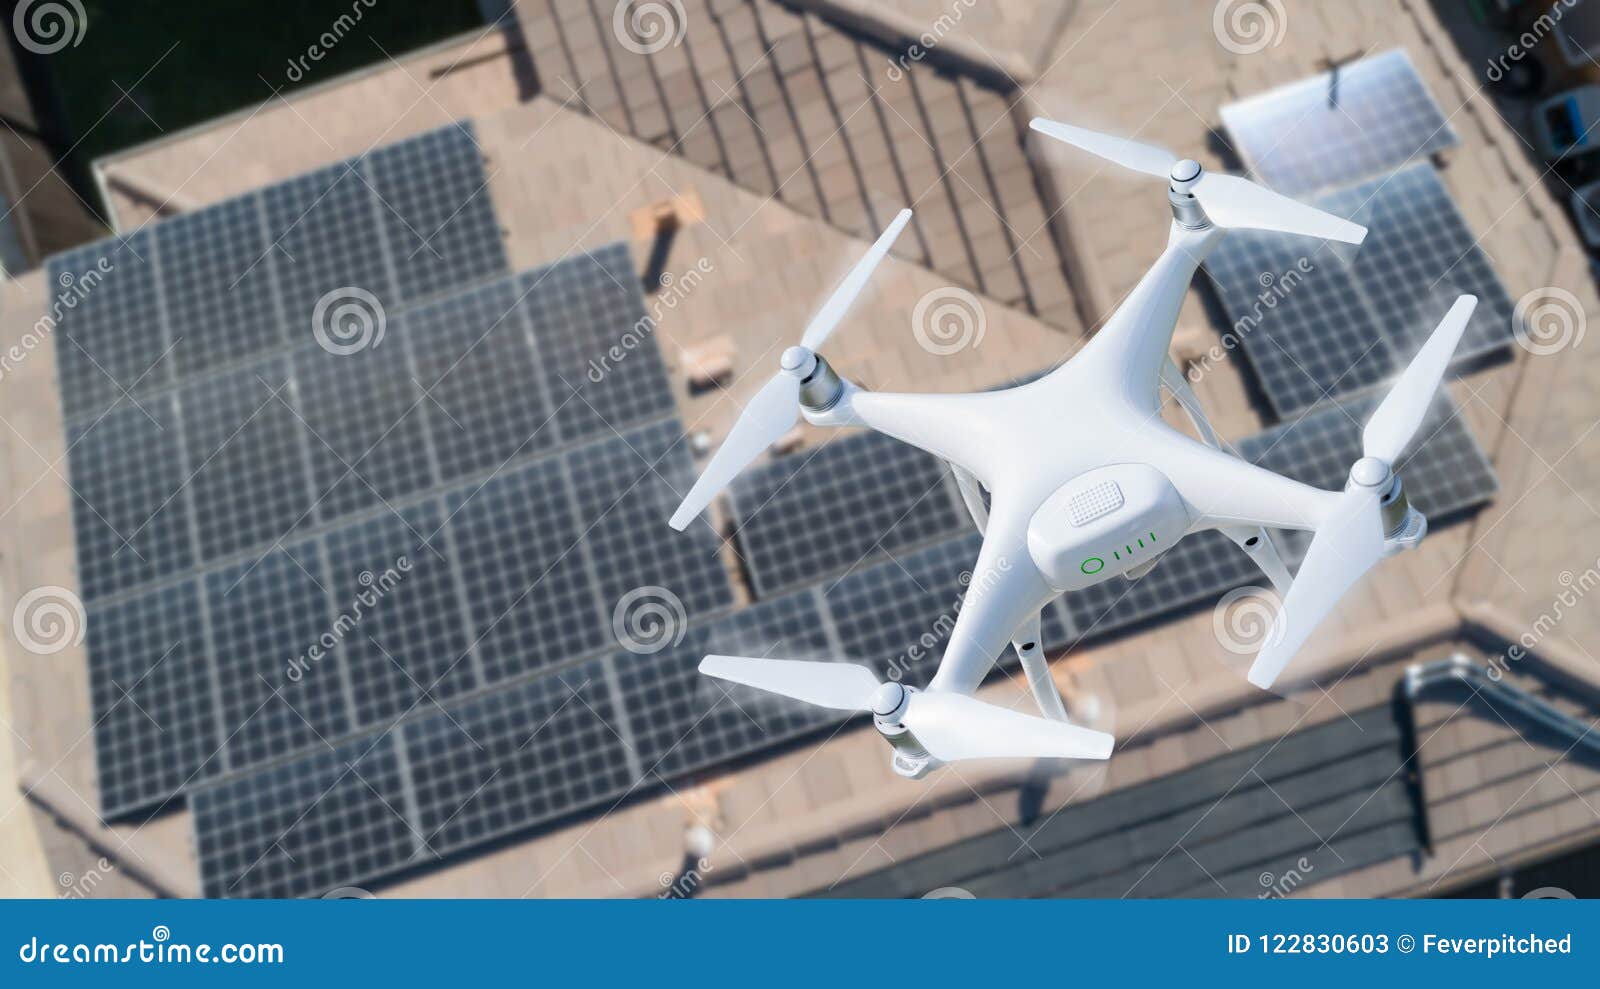 uav drone inspecting solar panels on large house